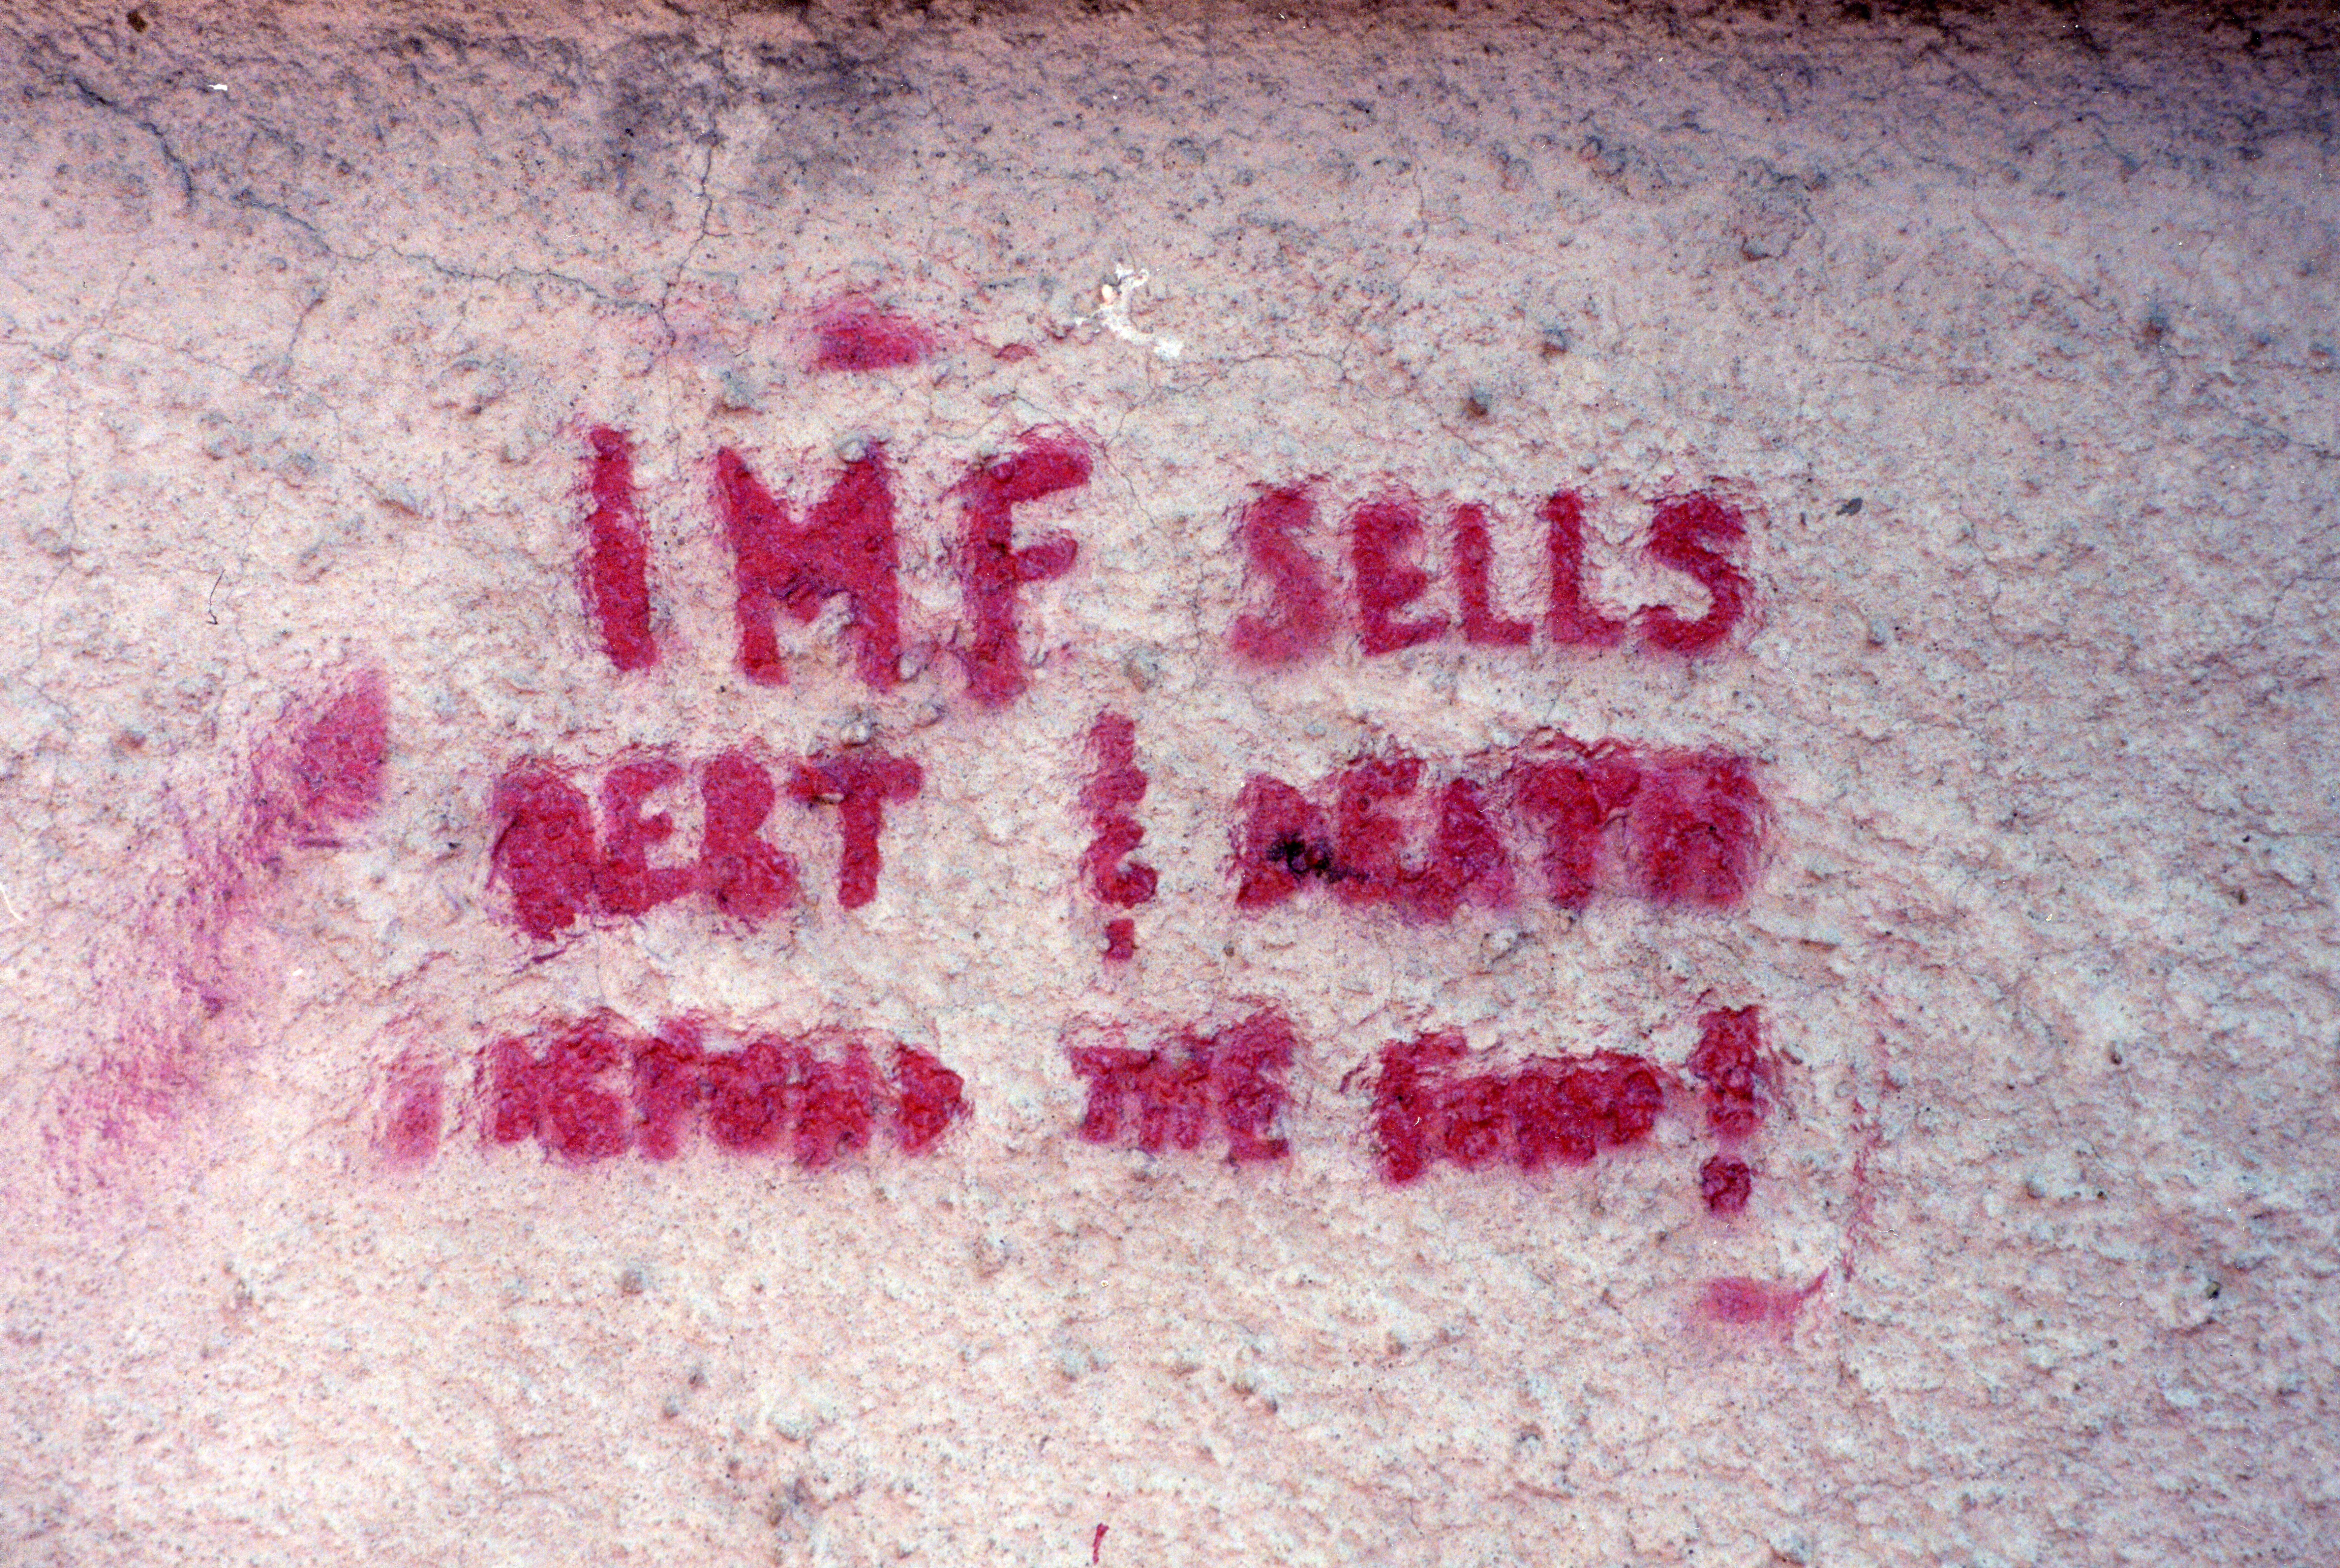 Pink stenciled letters on a sidewalk read: “IMF SELLS DEBT & DEATH. DEFUND THE FUND!”